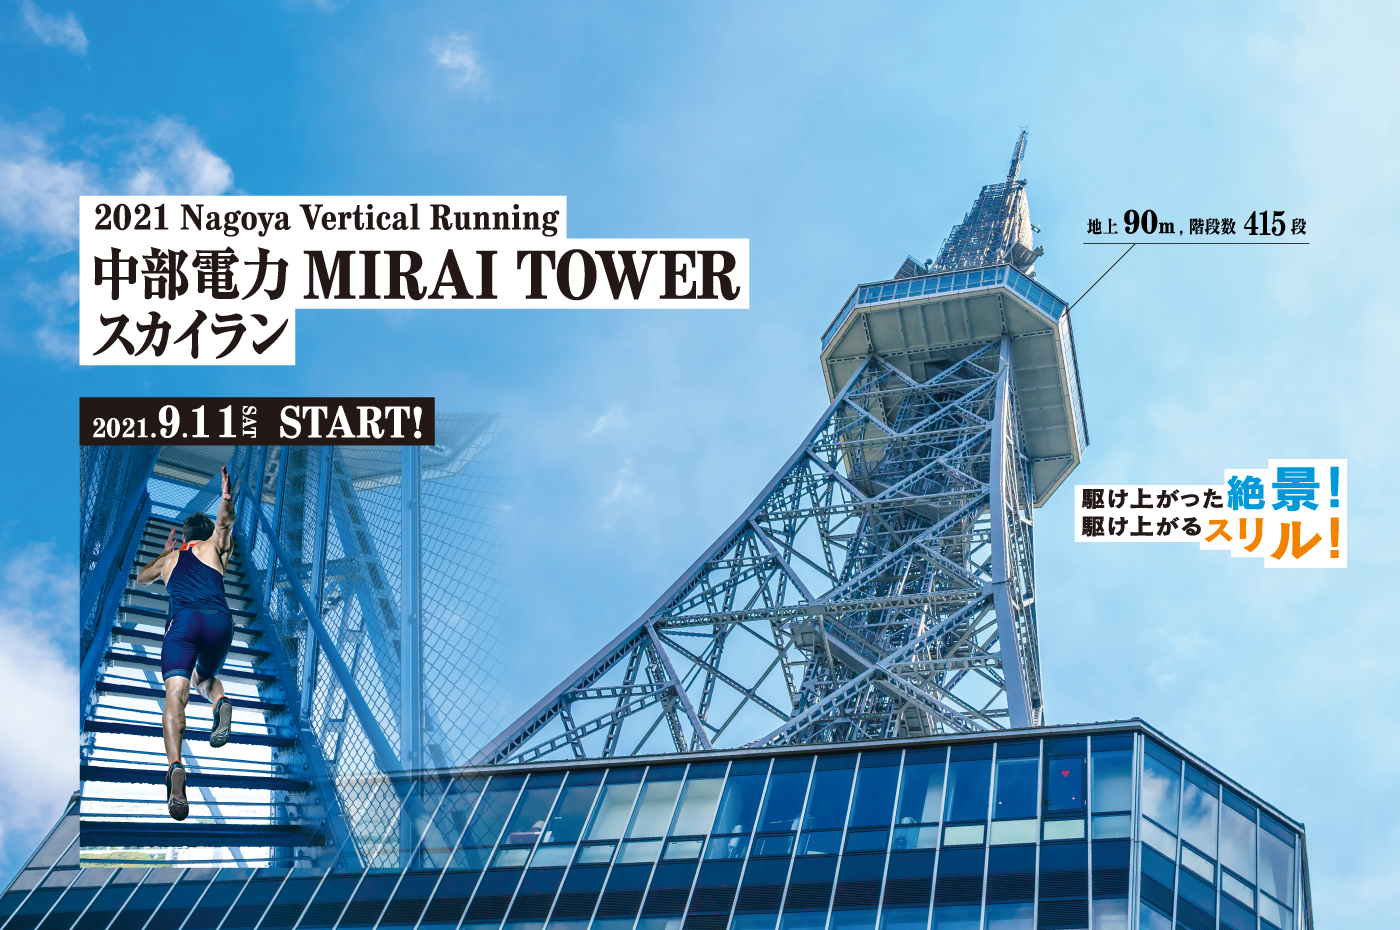 YOKOMORI presents 2021 Nagoya Vertical Running 中部電力 MIRAI TOWOR スカイラン